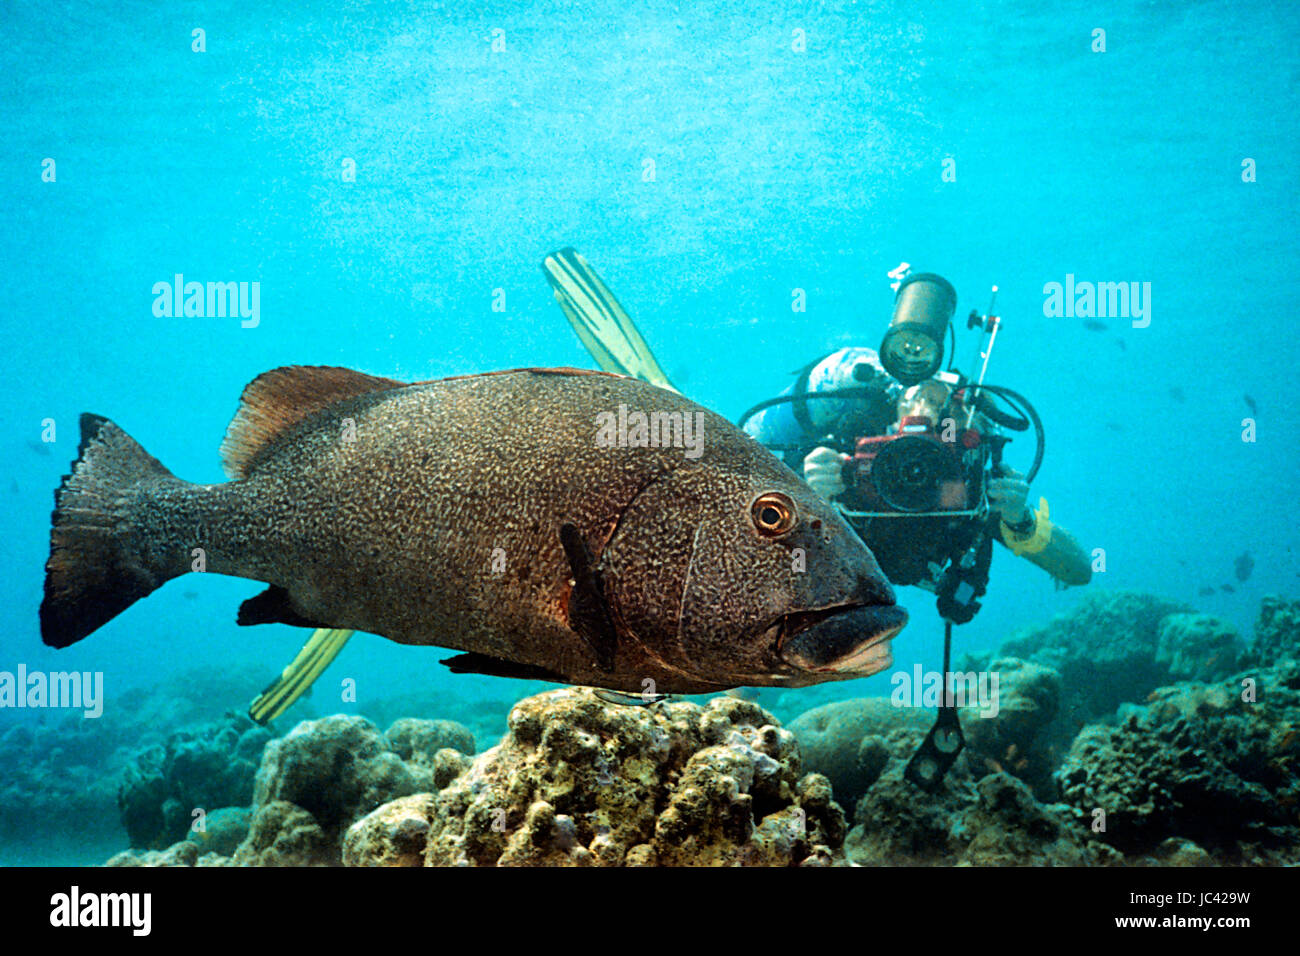 Unterwasser fotograf hi-res stock photography and images - Alamy